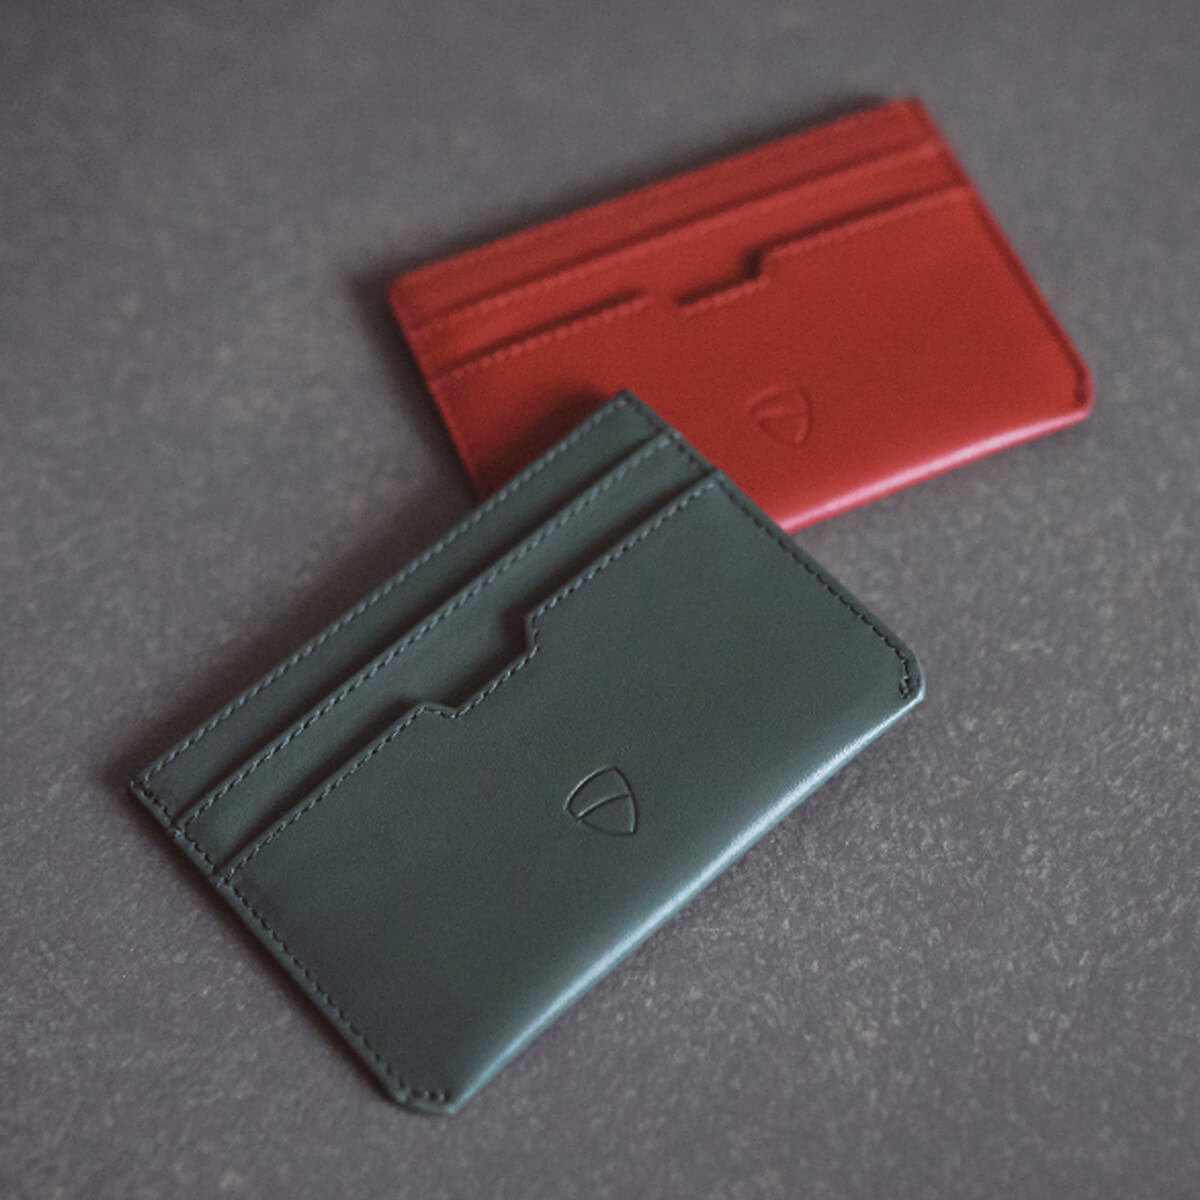 Minimalist Moorgate card wallet appearance